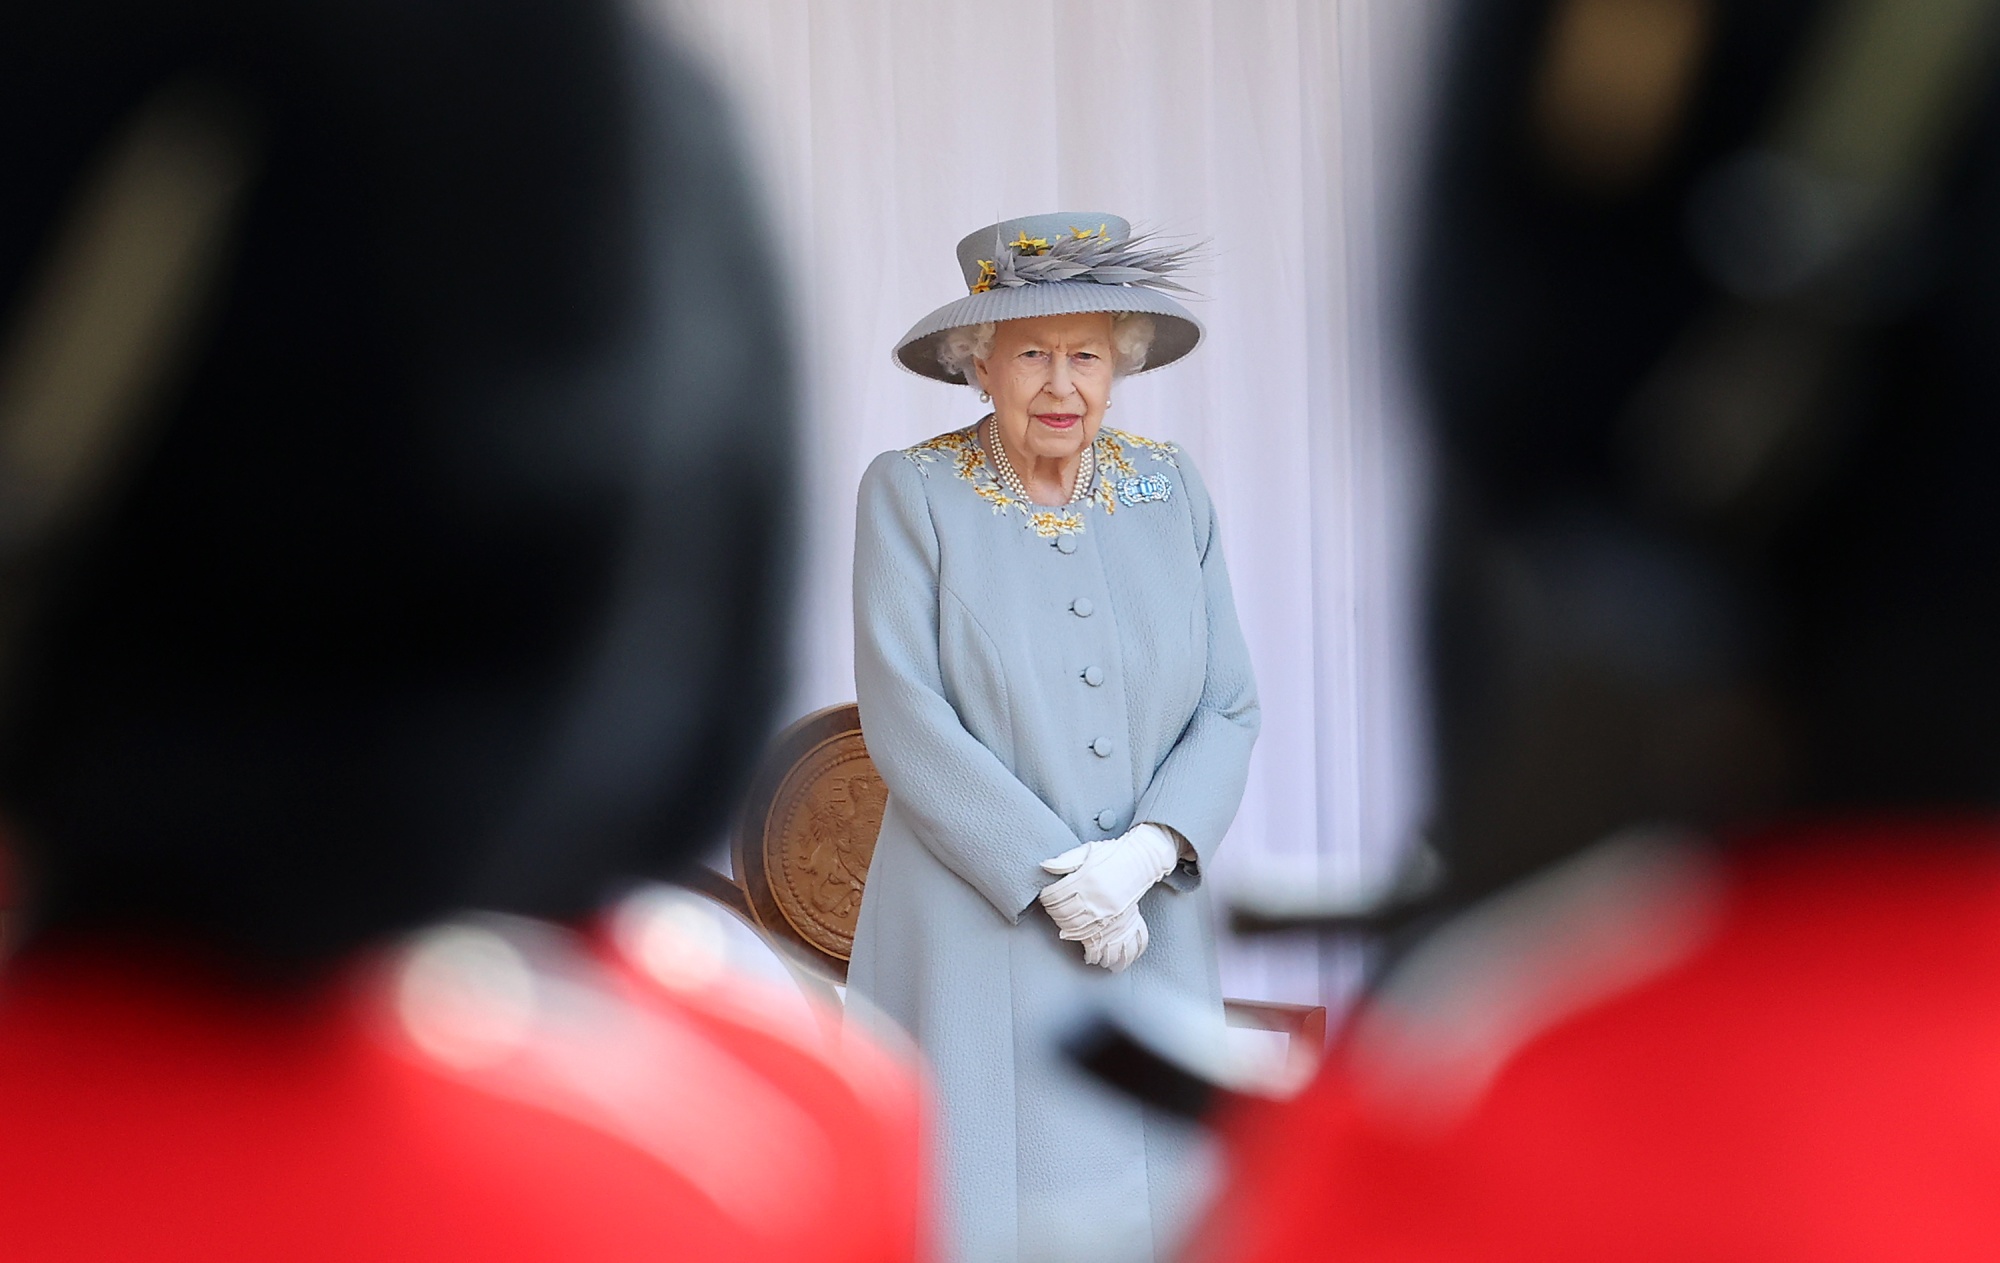 Queen Elizabeth II attends a military ceremony&nbsp;in June 2021.